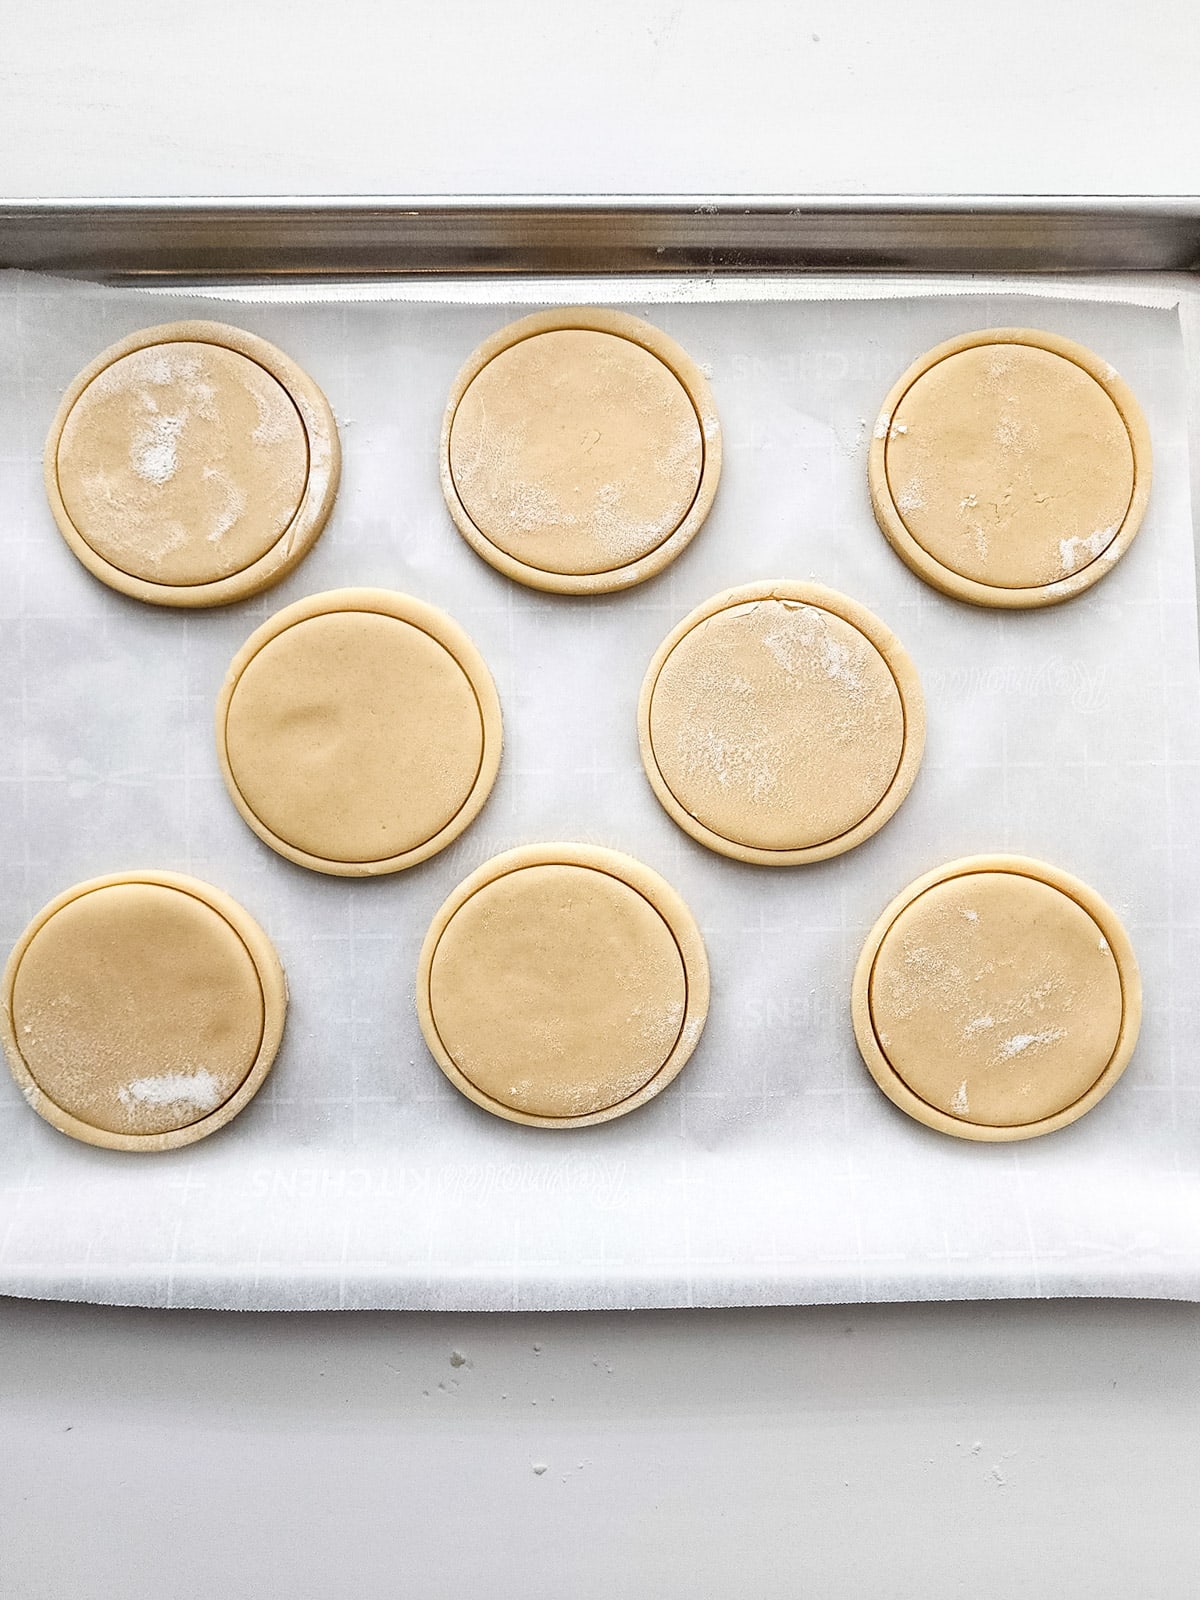 Round imprints made around edges of cookies